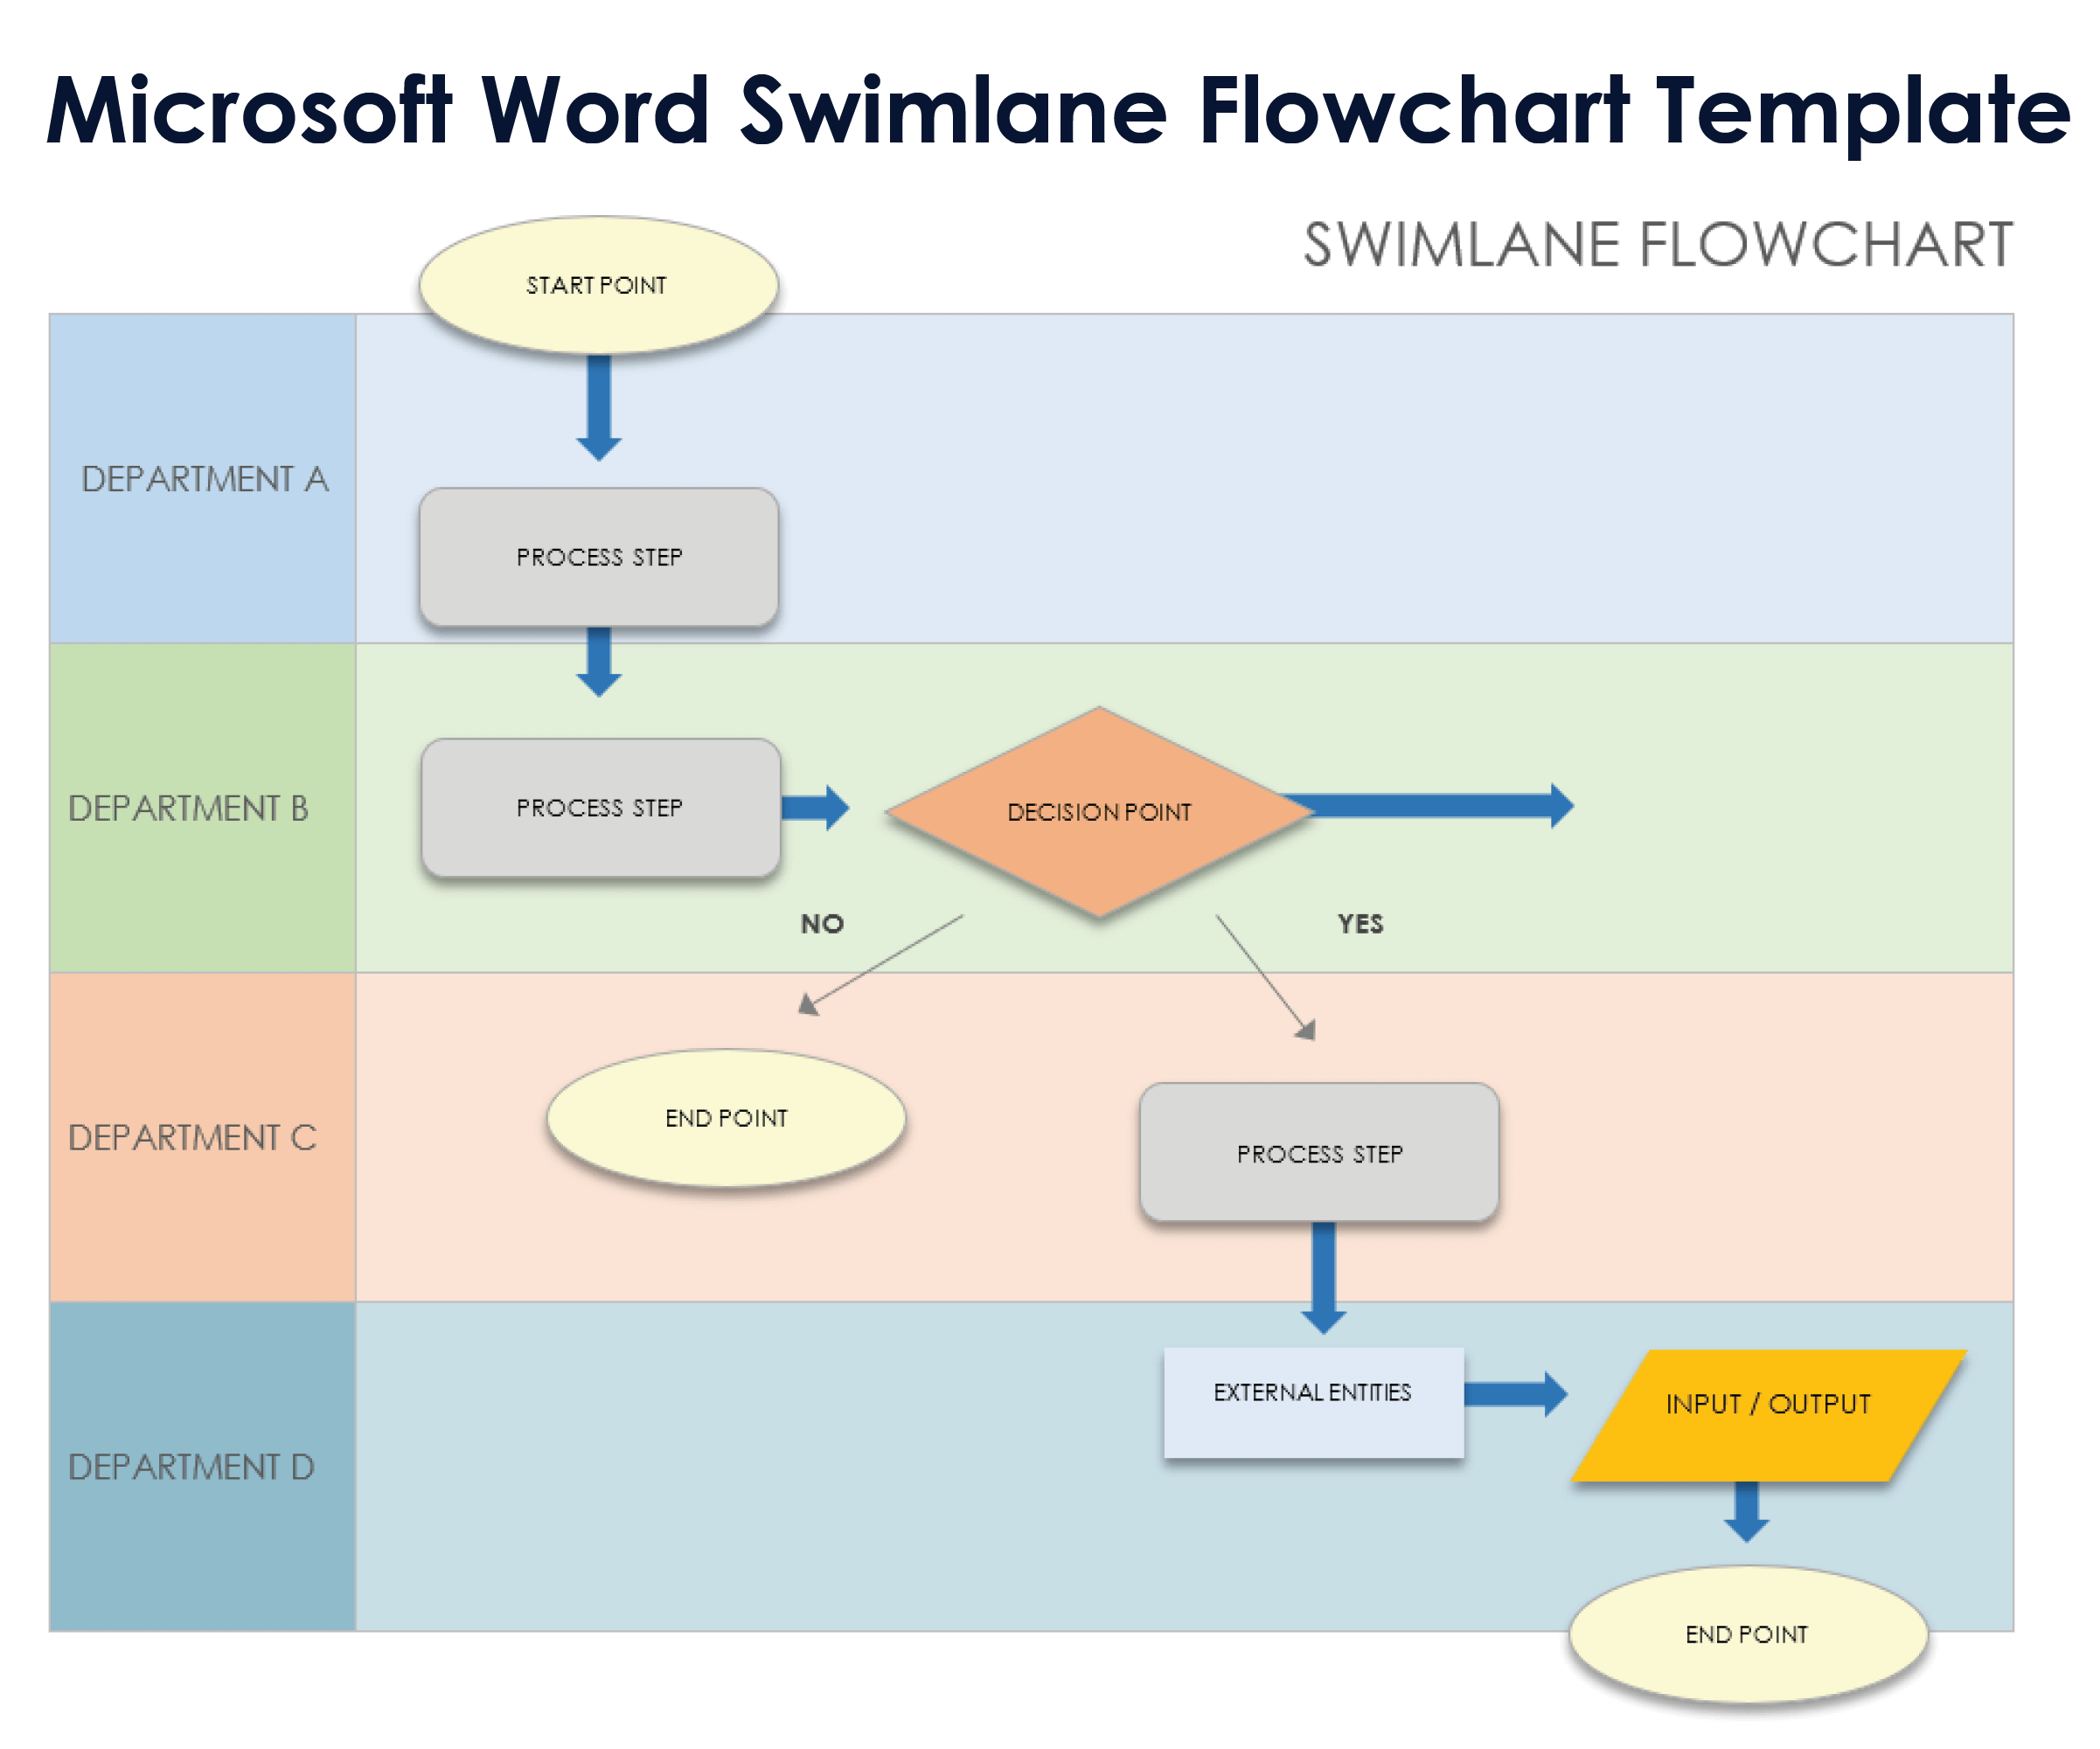 Microsoft Word Swimlane Flowchart Template